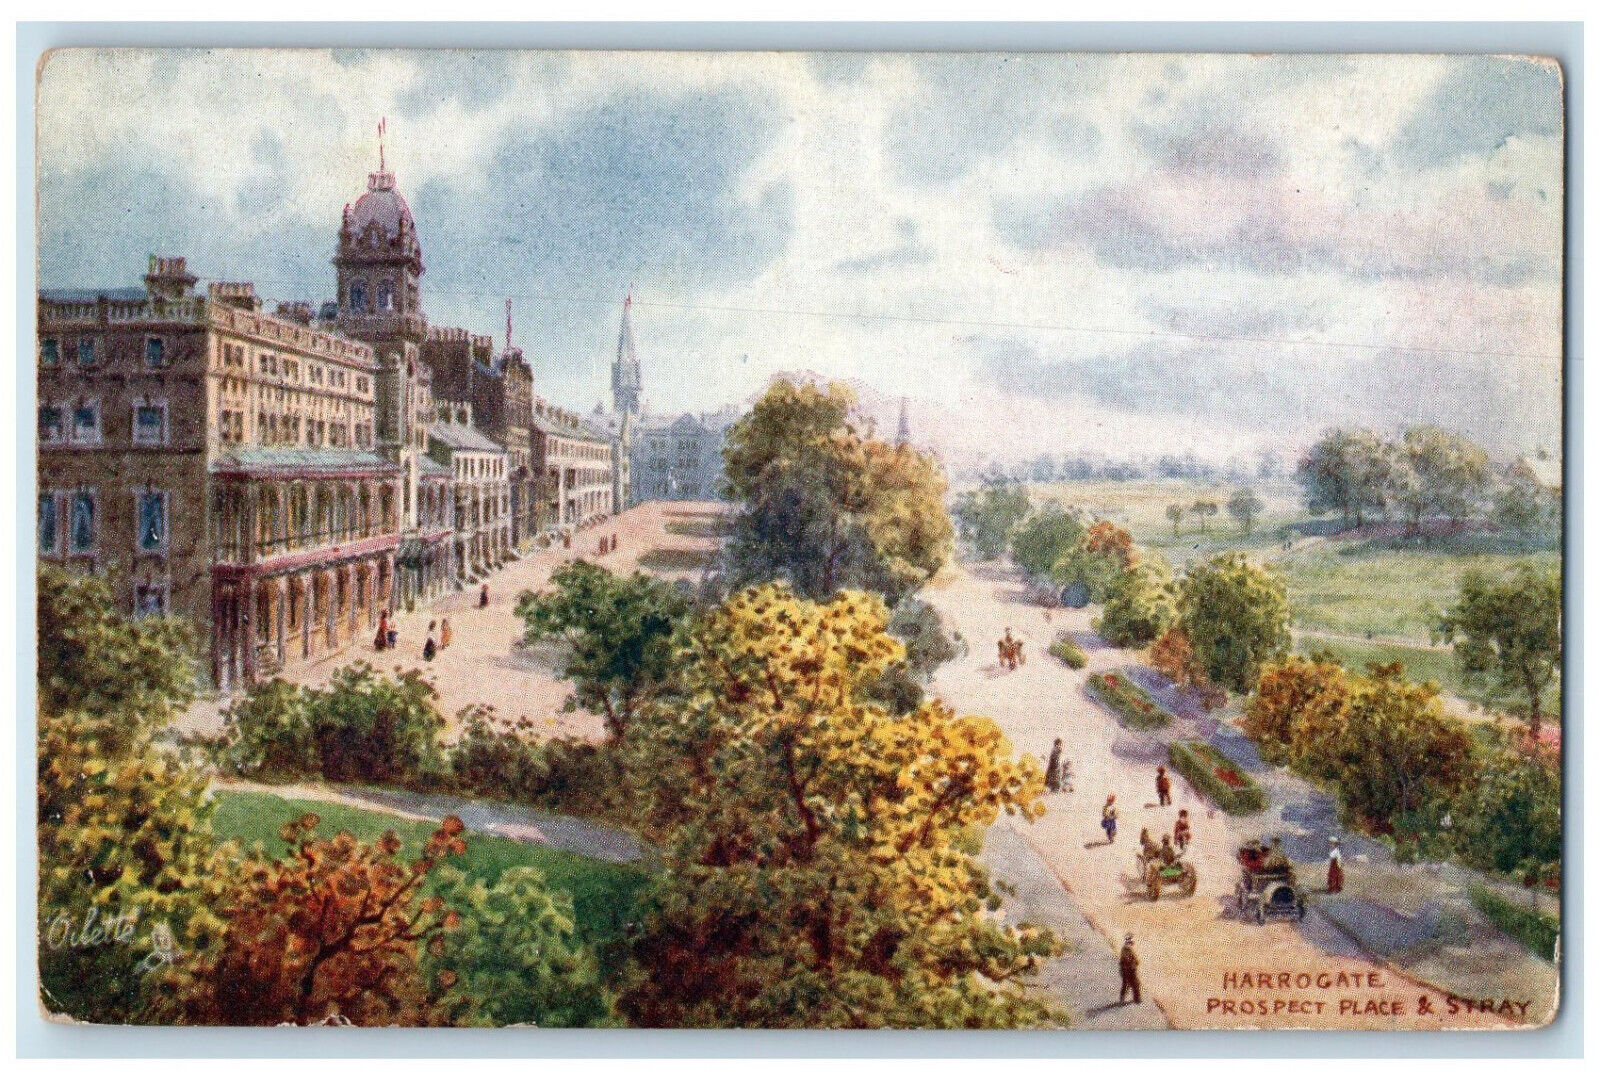 c1910 Harrogate Prospect Place & Stray England Oilette Tuck Art Postcard